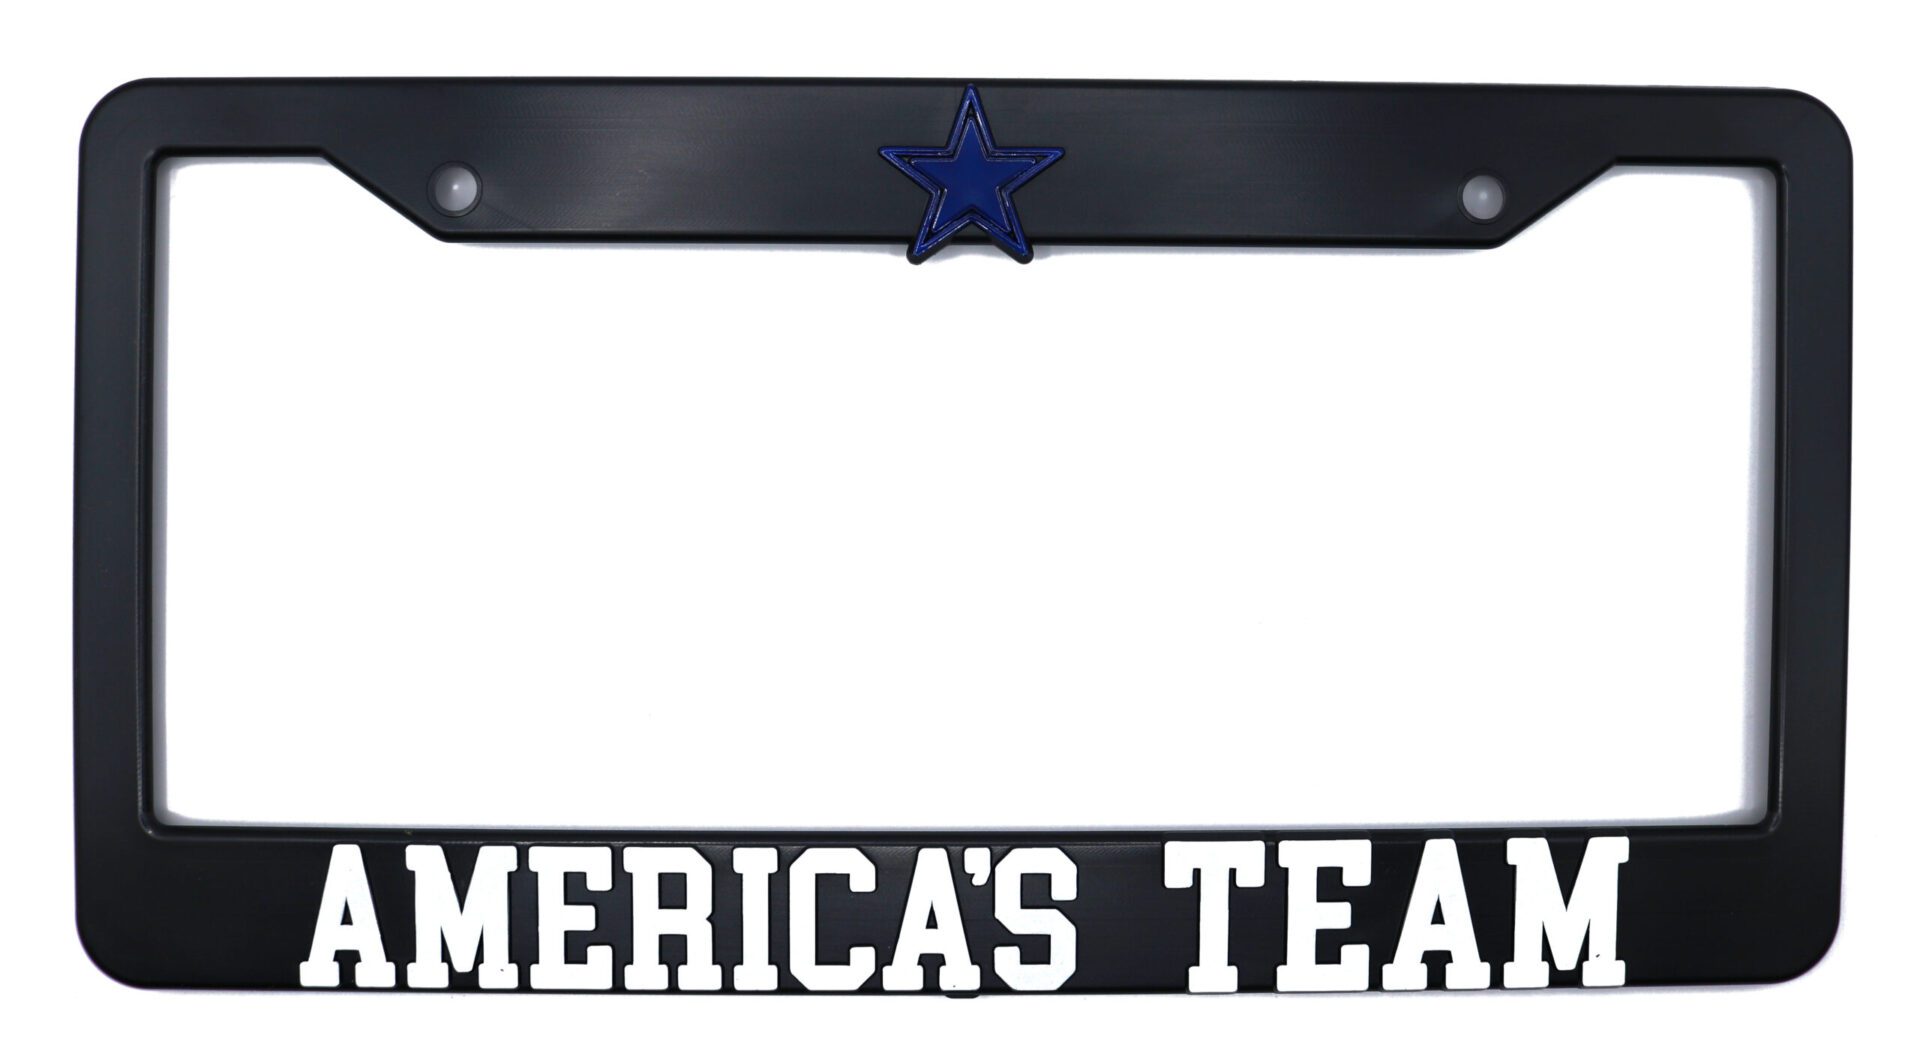 Dallas Cowboys “Americas Team” License Plate Frame